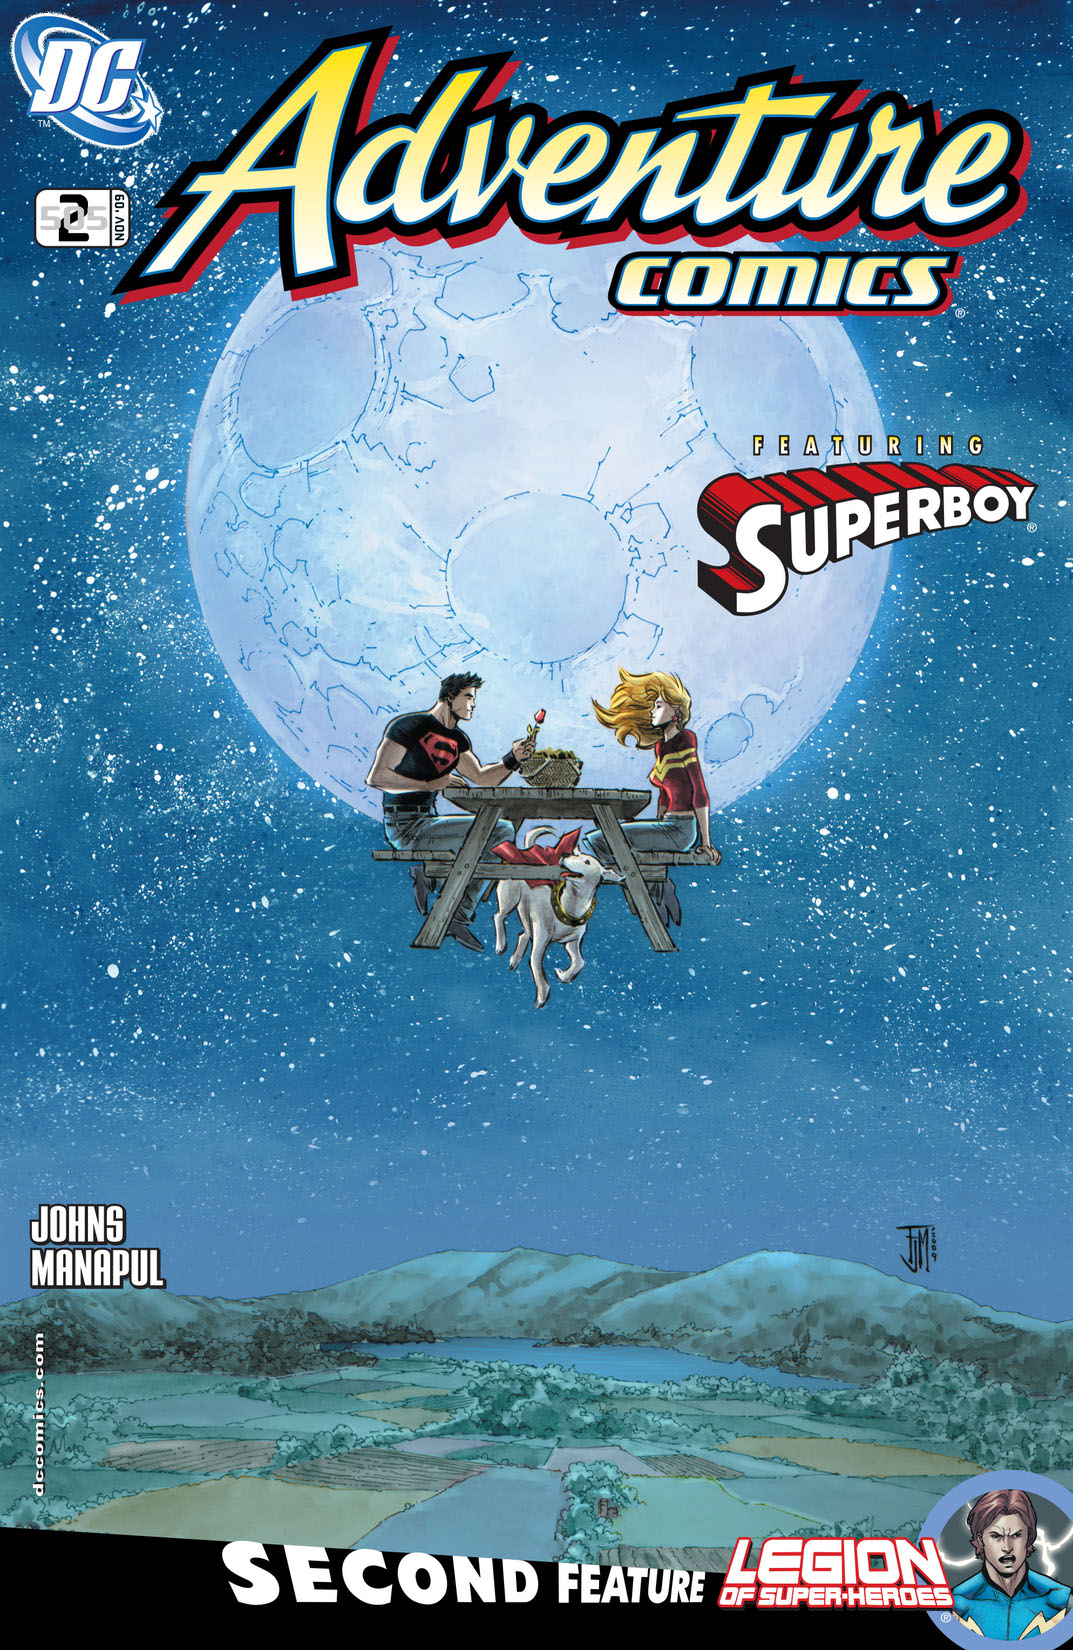 Adventure Comics (2009-) #2 preview images